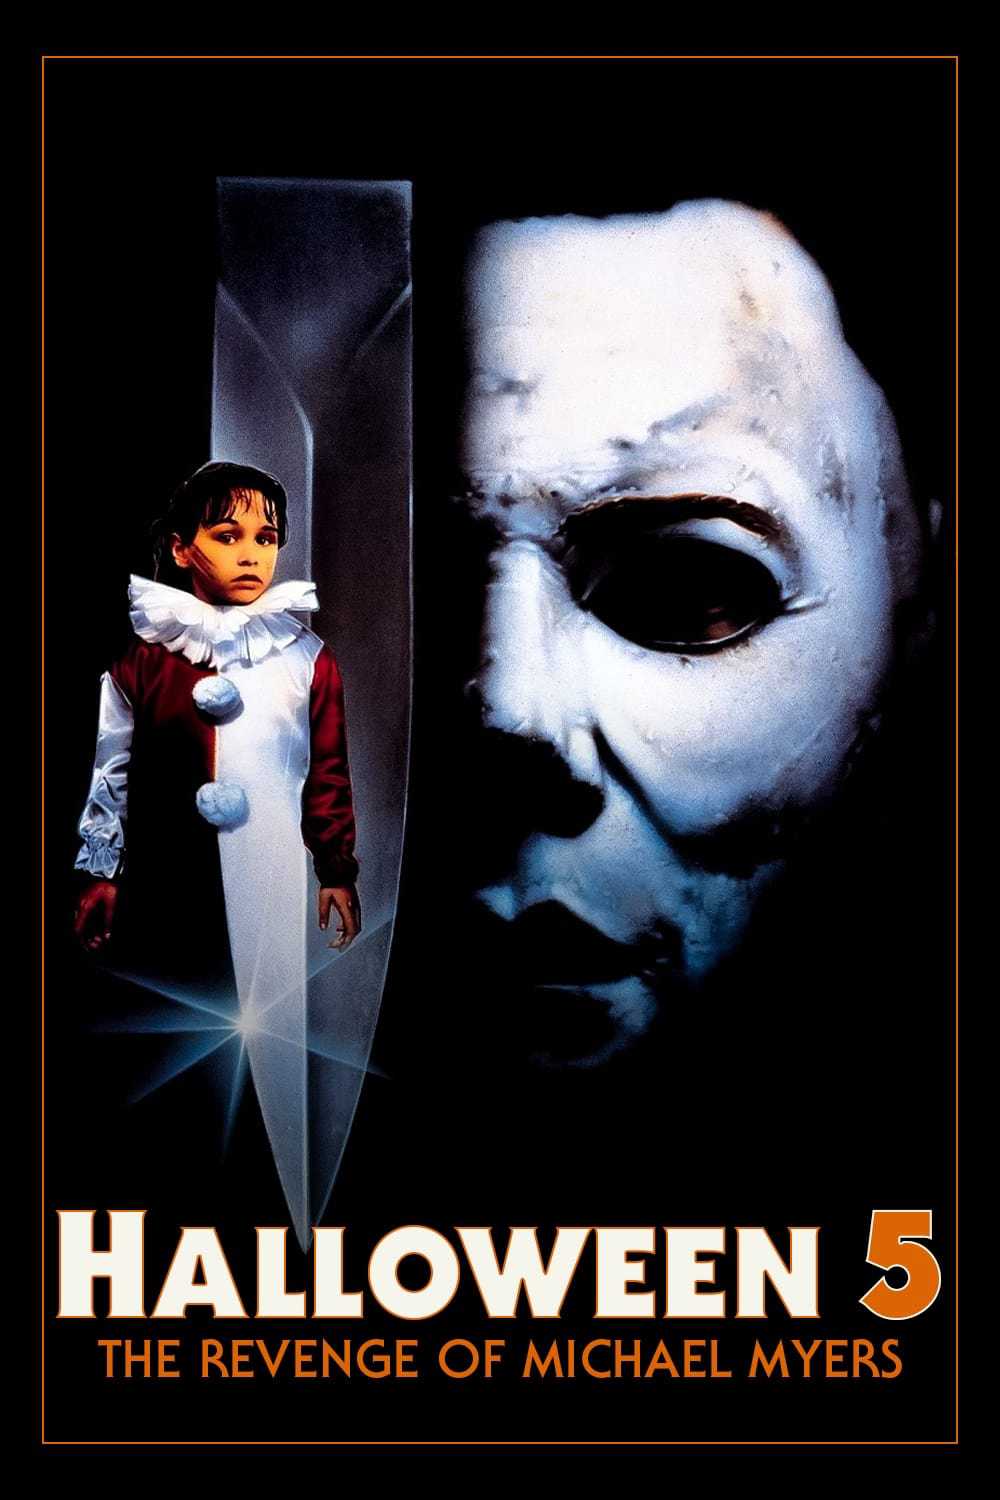 Halloween 5: Michael Myers Báo Thù - Halloween 5: The Revenge of Michael Myers